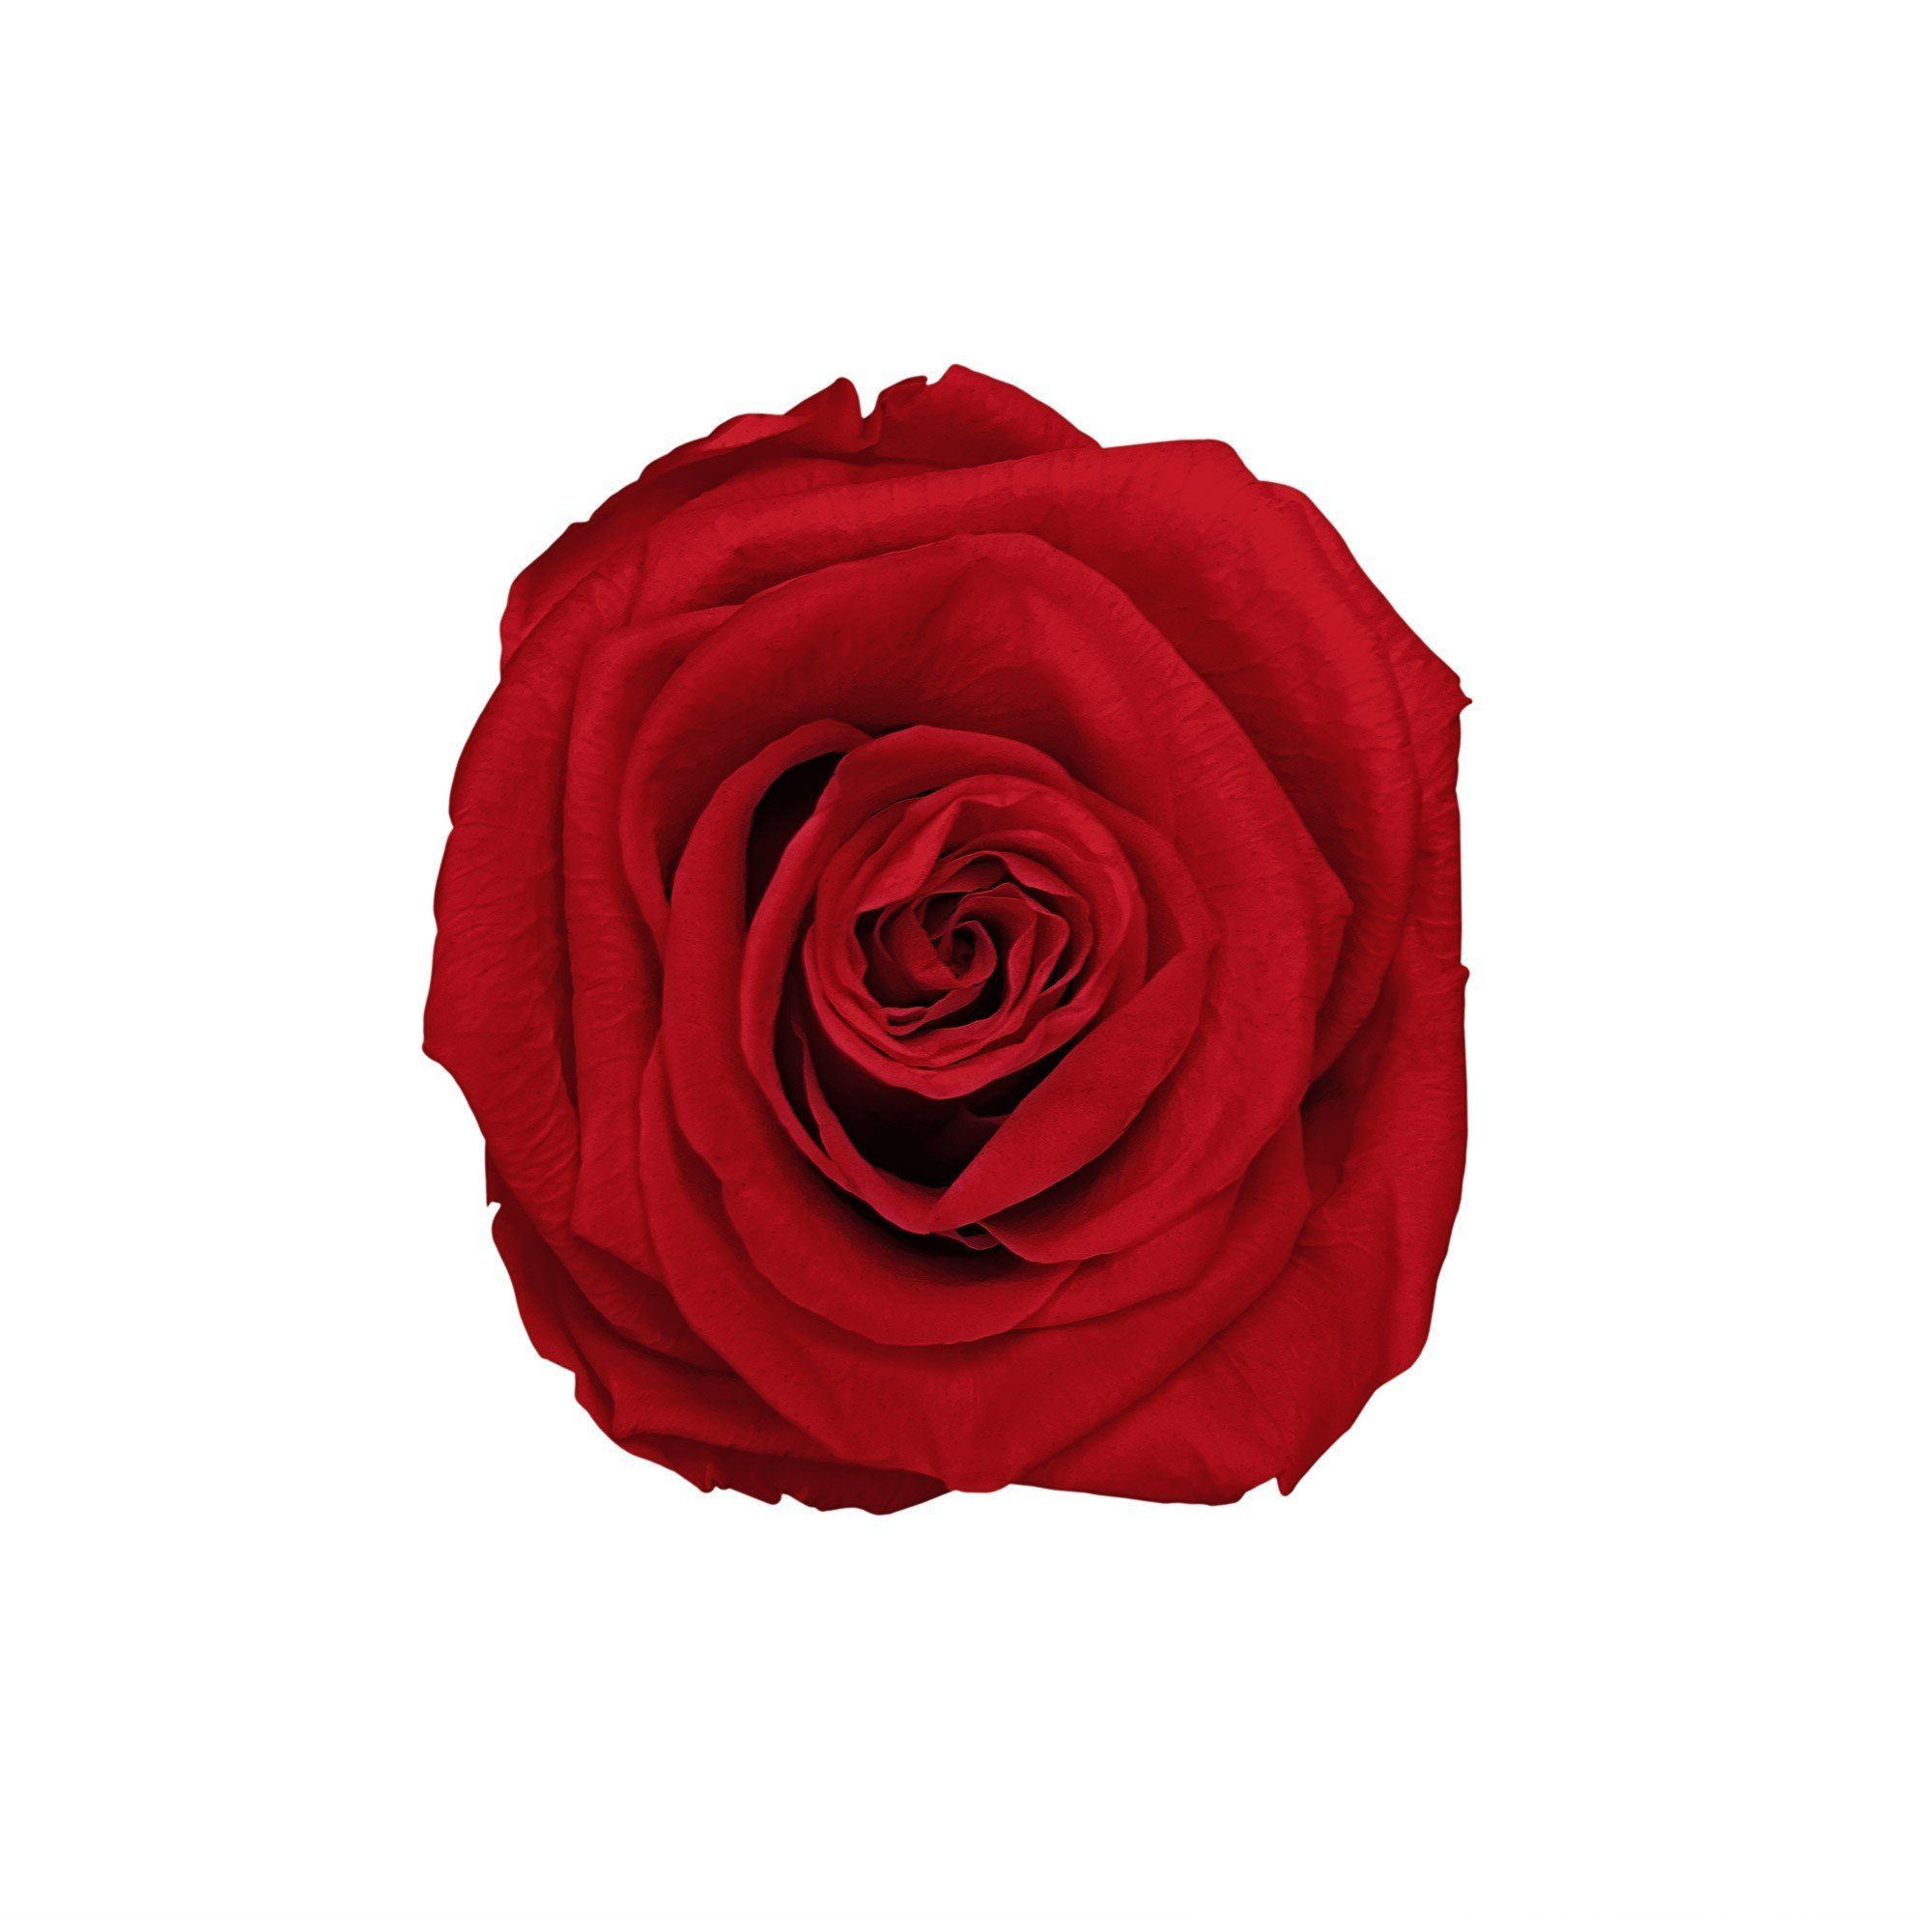 Kunstblume Runde Echte, konservierte duftende Infinity Höhe Heritage I Rose Rose, 1er Rosenbox I 9 Red 3 Holy Infinity Raul Jahre in weiß Blumen haltbar by Richter Flowers, I mit cm